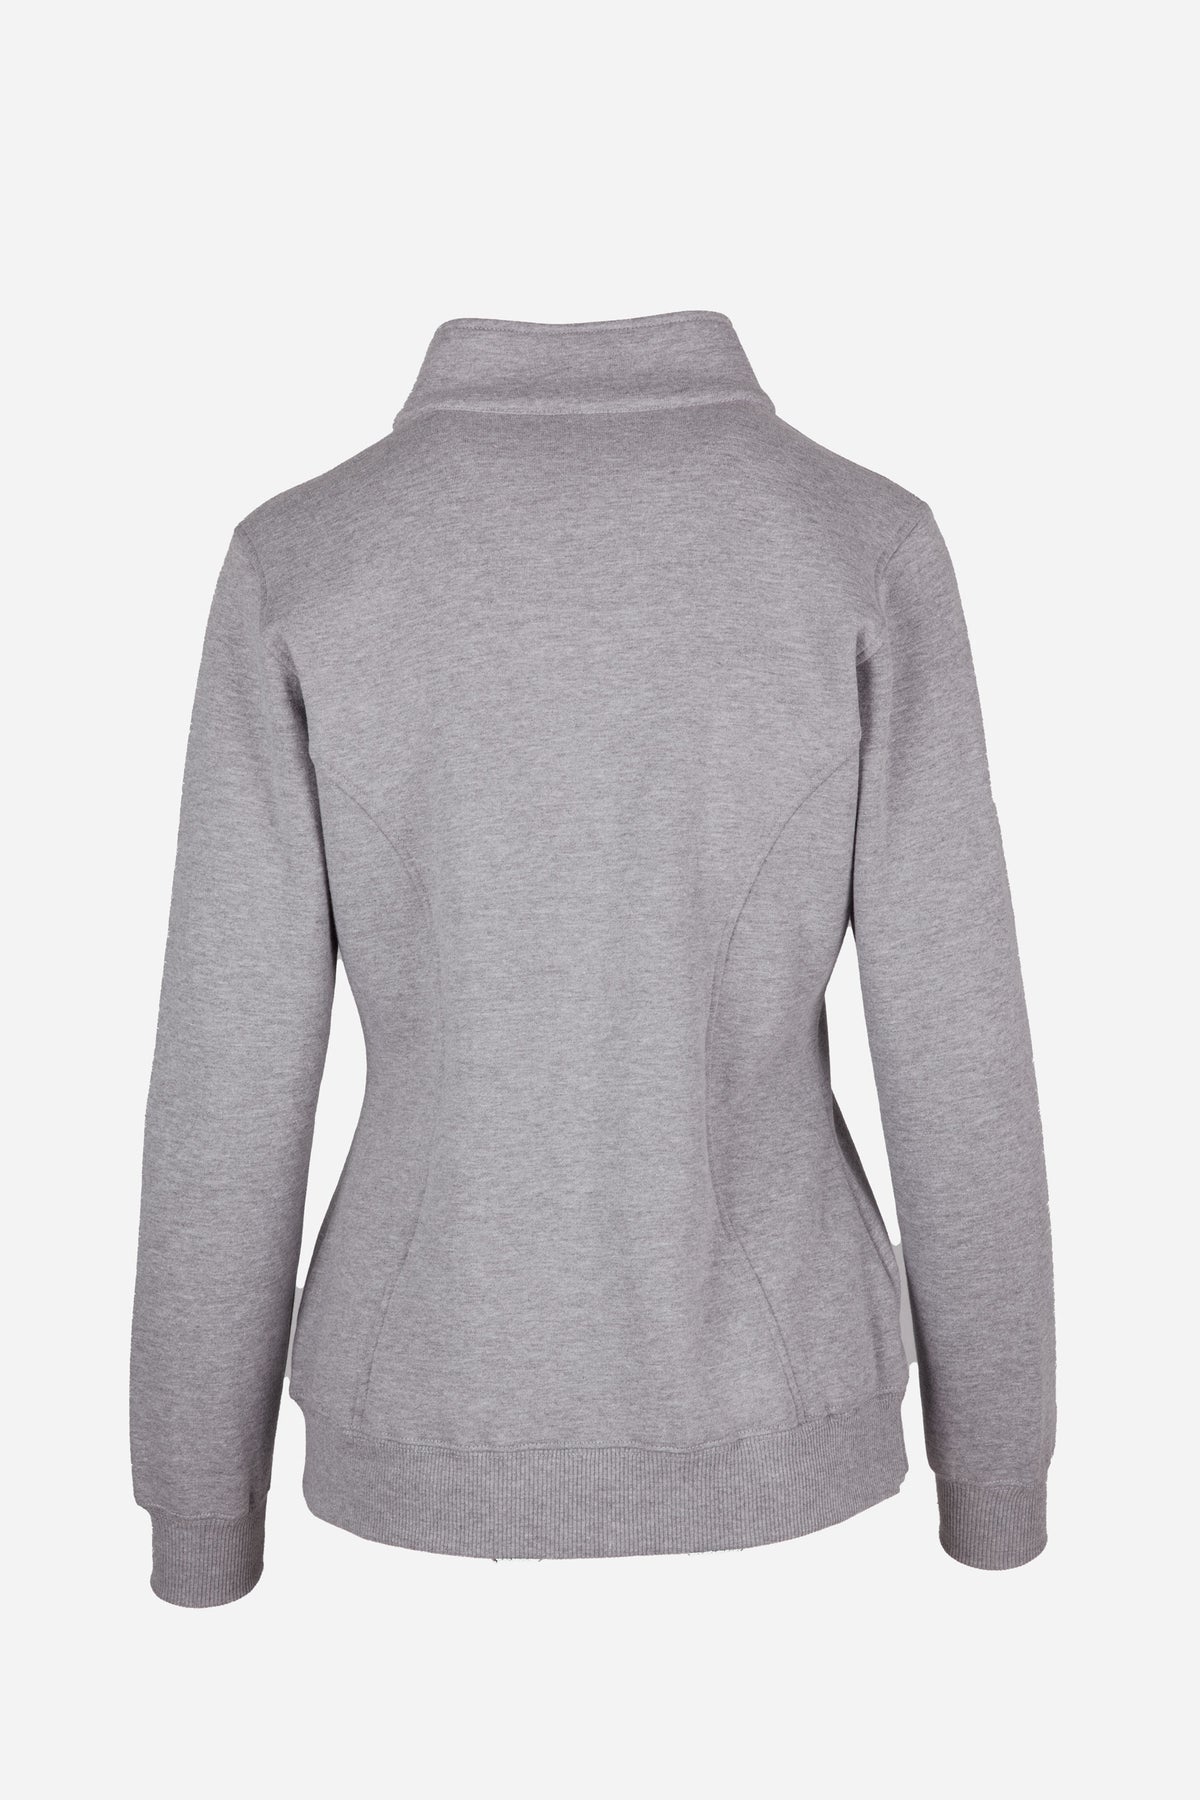 Tumby Bay Blues Ladies' Enterprise Half Zip Fleece Logo Embroidered Grey F365LD-Collins Clothing Co